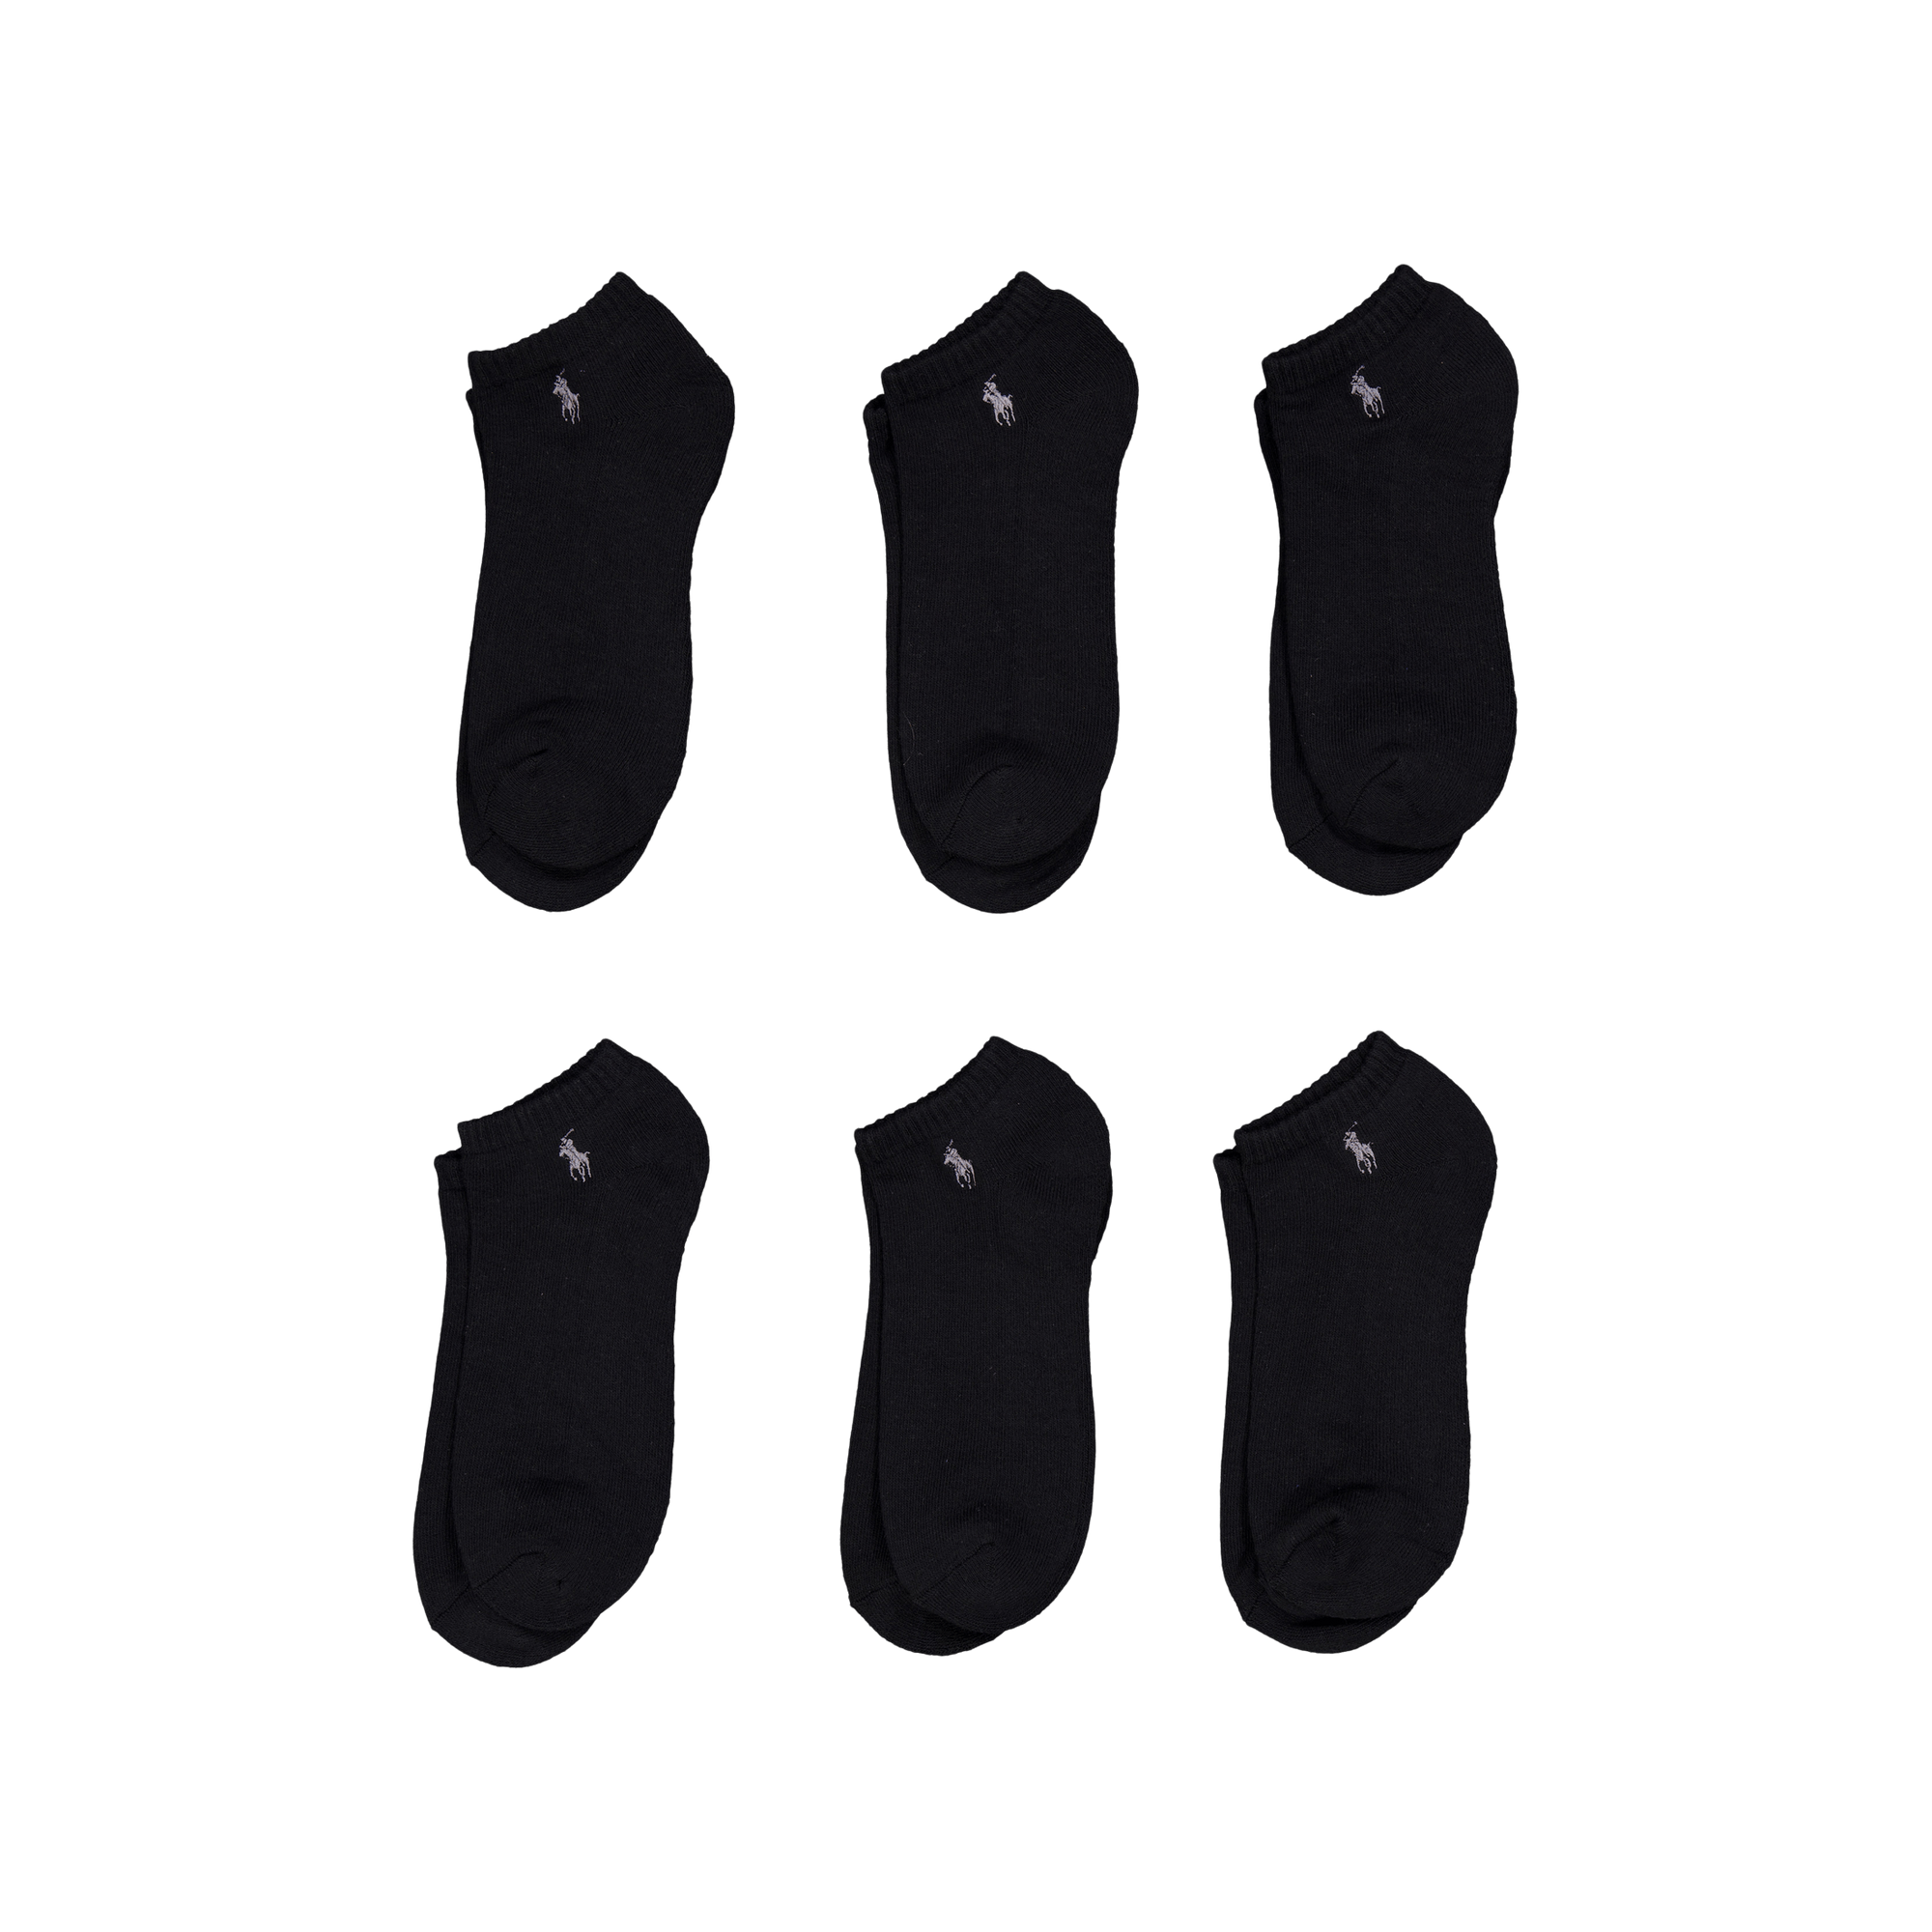 Cushioned Low-Cut-Sock 6-Pack Black